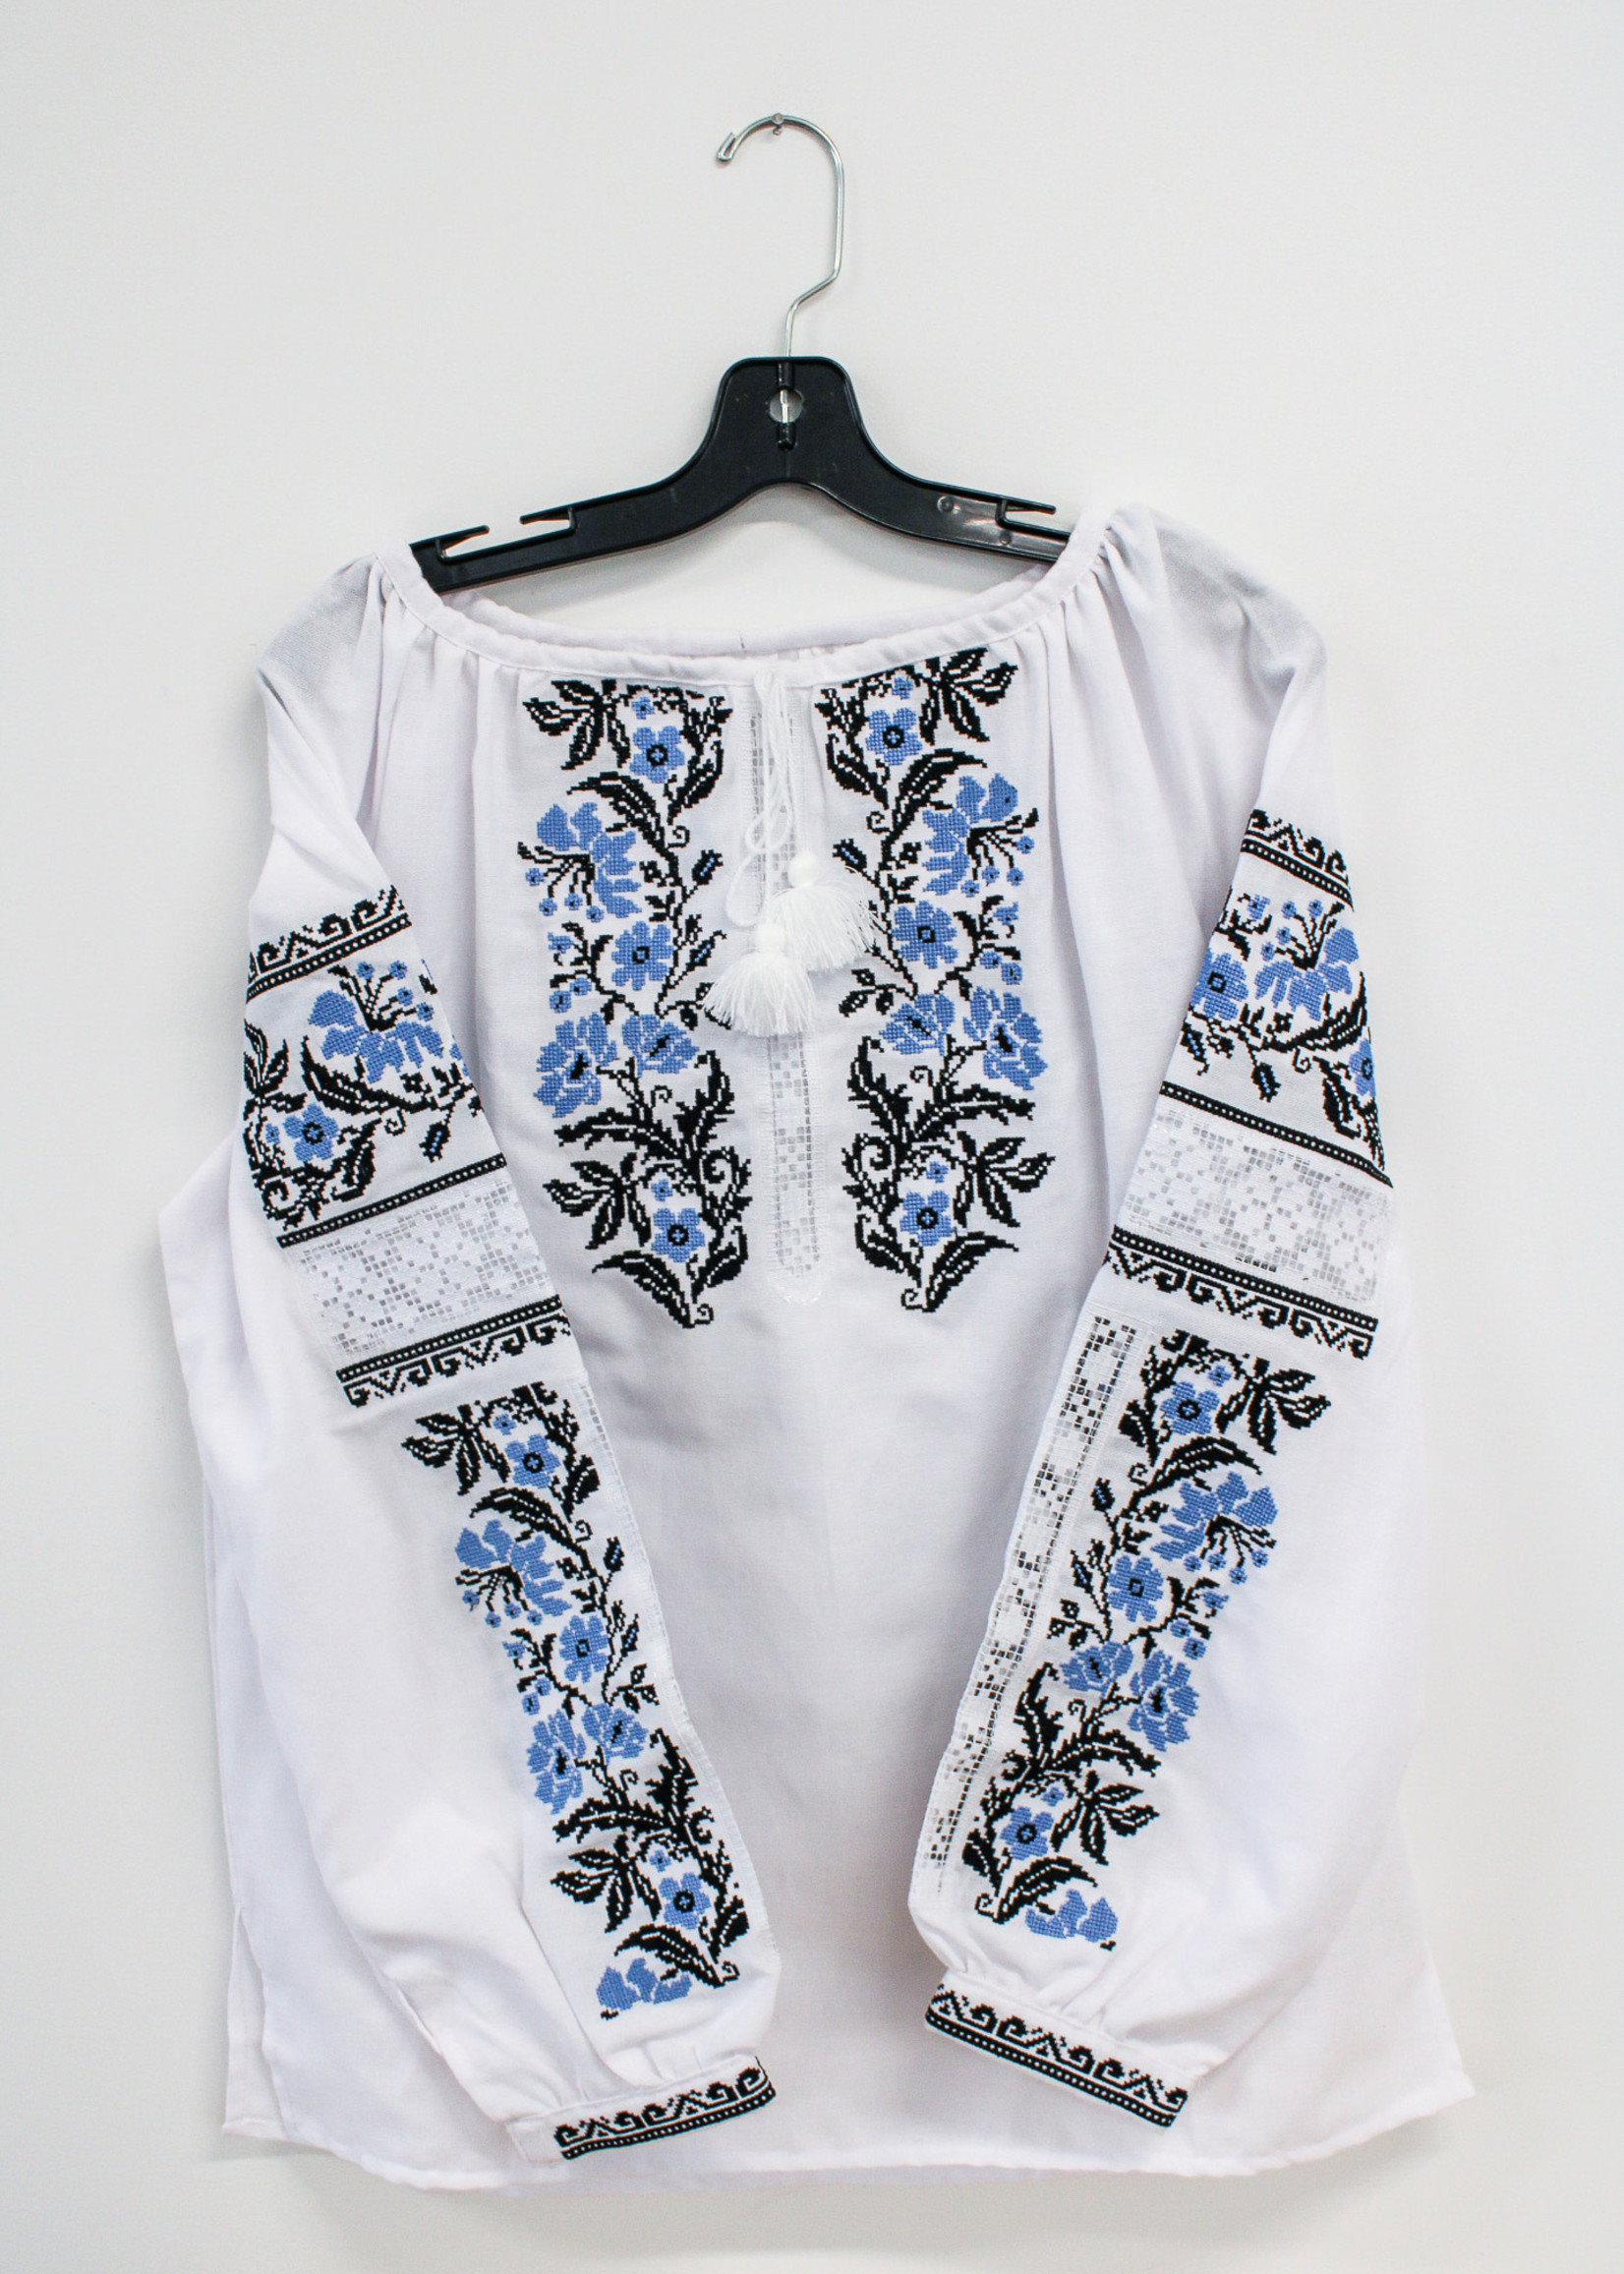 APPAREL - (W)Vyshyvanka White/Blue/Black/Lace Floral Embroidery 48-3XL